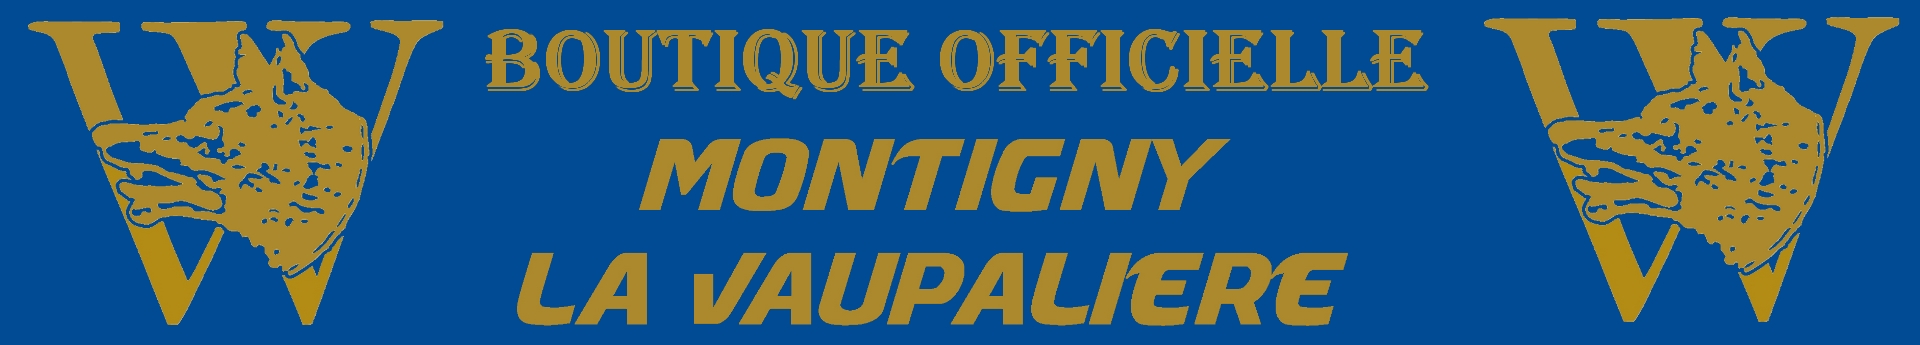 Montigny-La Vaupalière Running Club Title Image